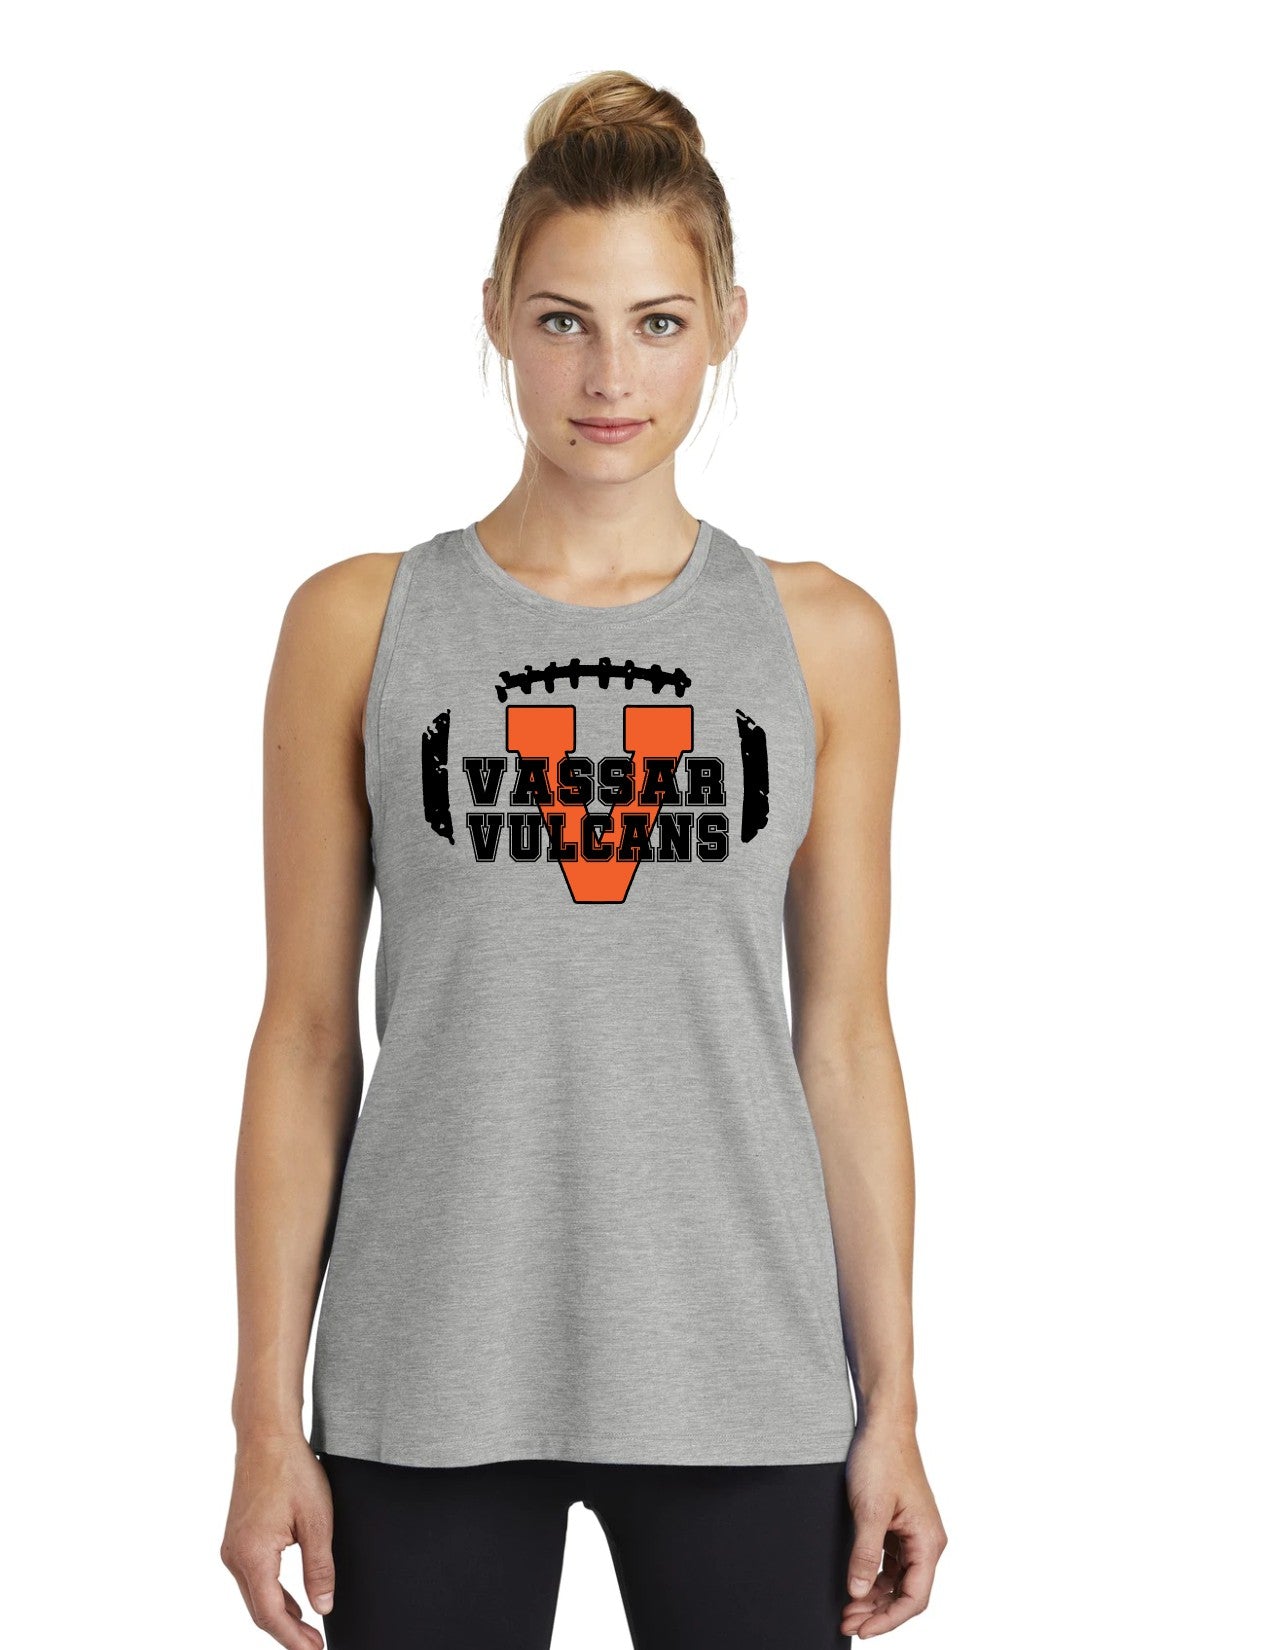 Vassar Football Women's Racerback Tank Top